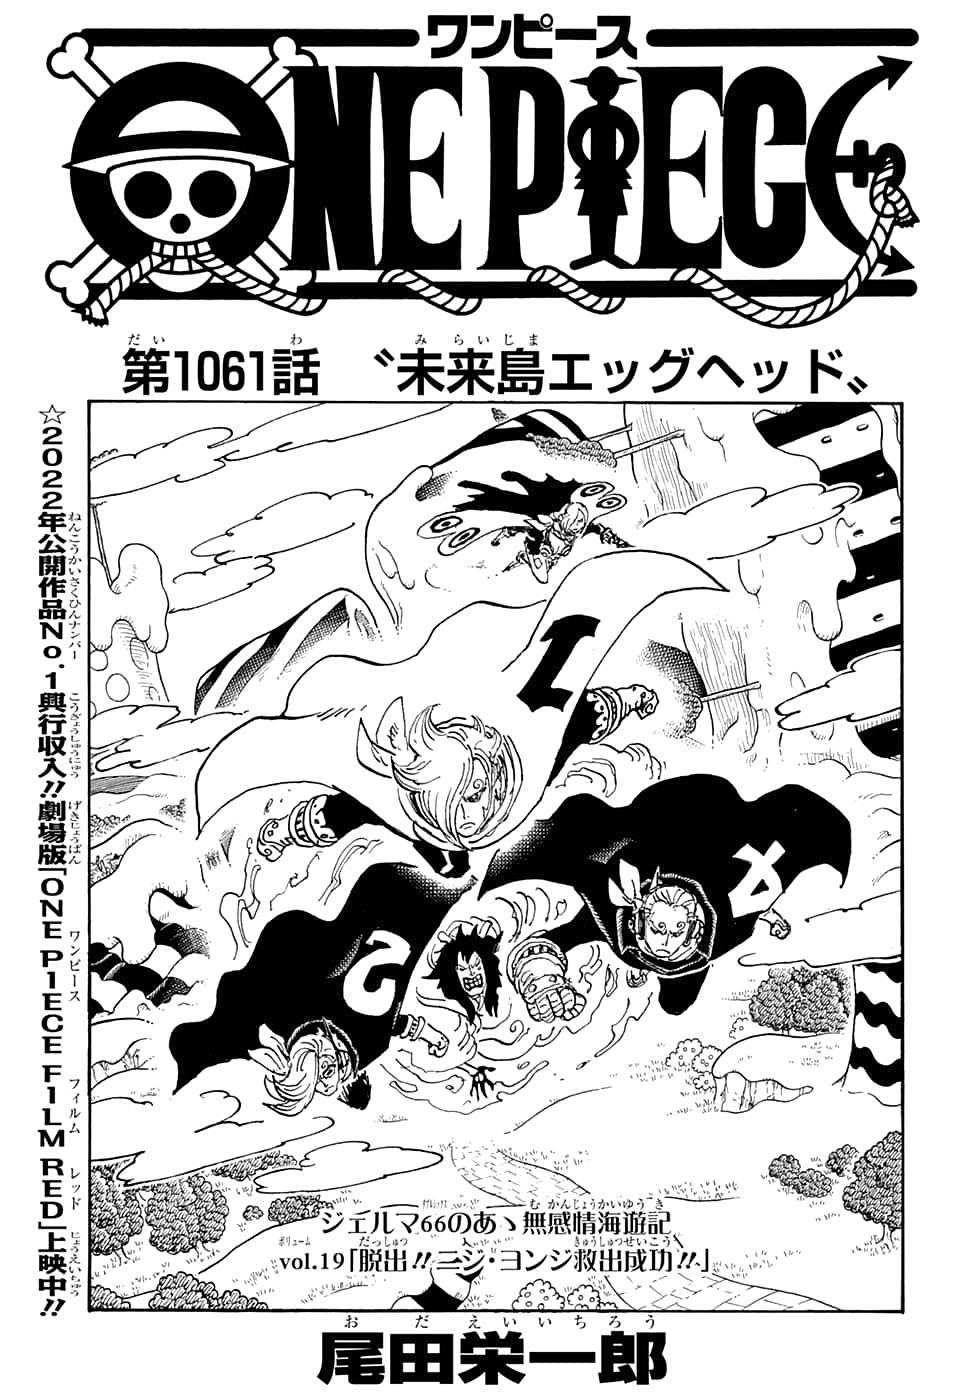 One Piece chapter 1061 summary. #onepiece #onepiecemanga